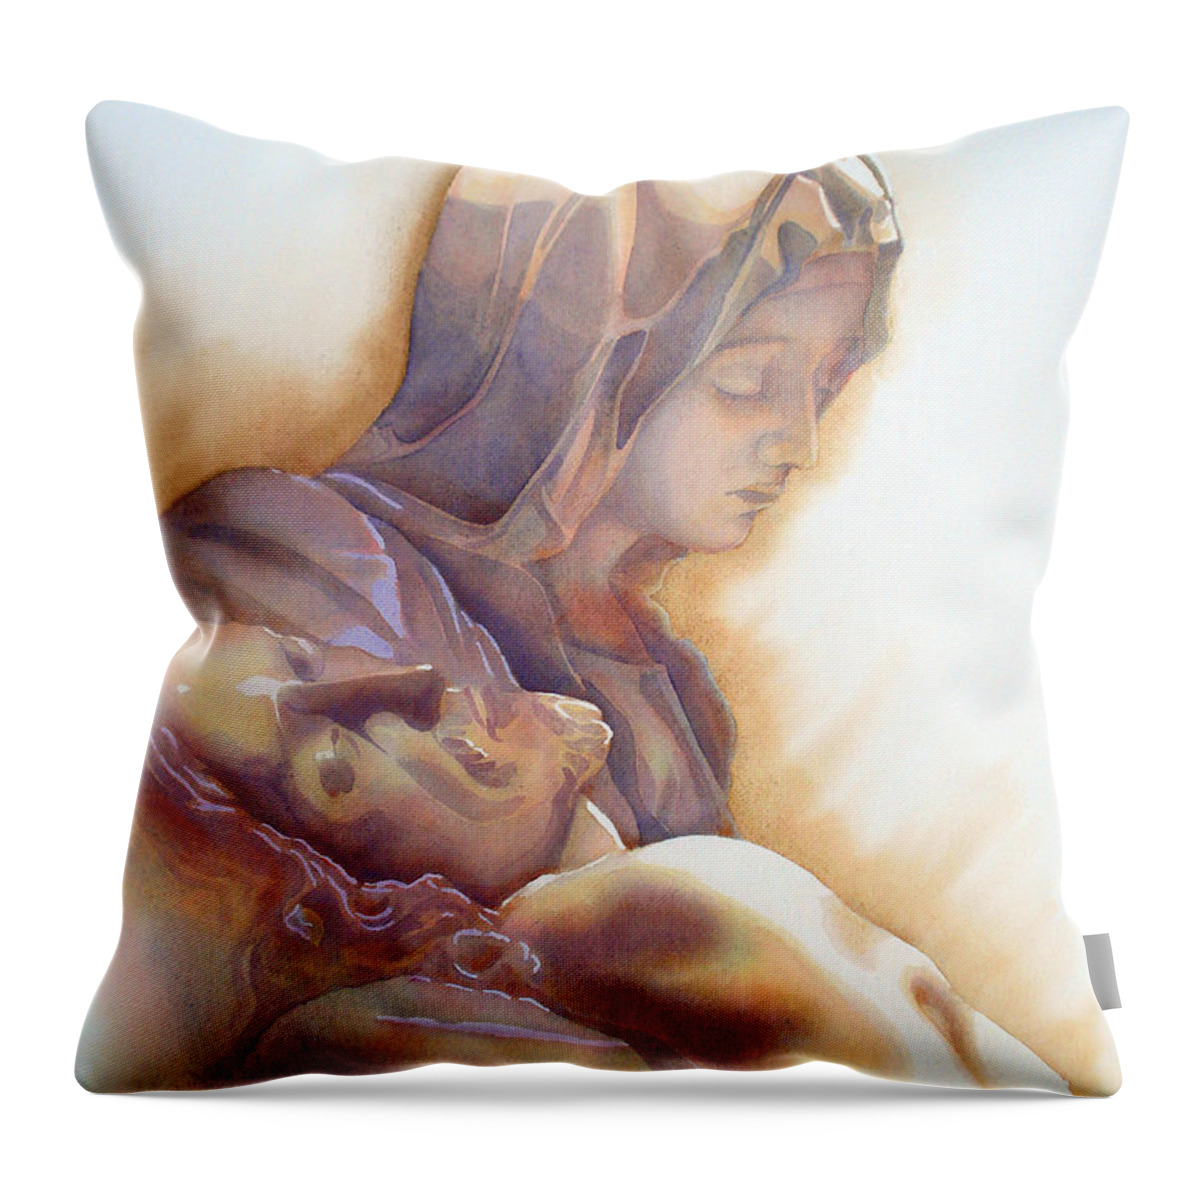  La Pieta Throw Pillow featuring the painting LA PIETA By Michelangelo #1 by J U A N - O A X A C A